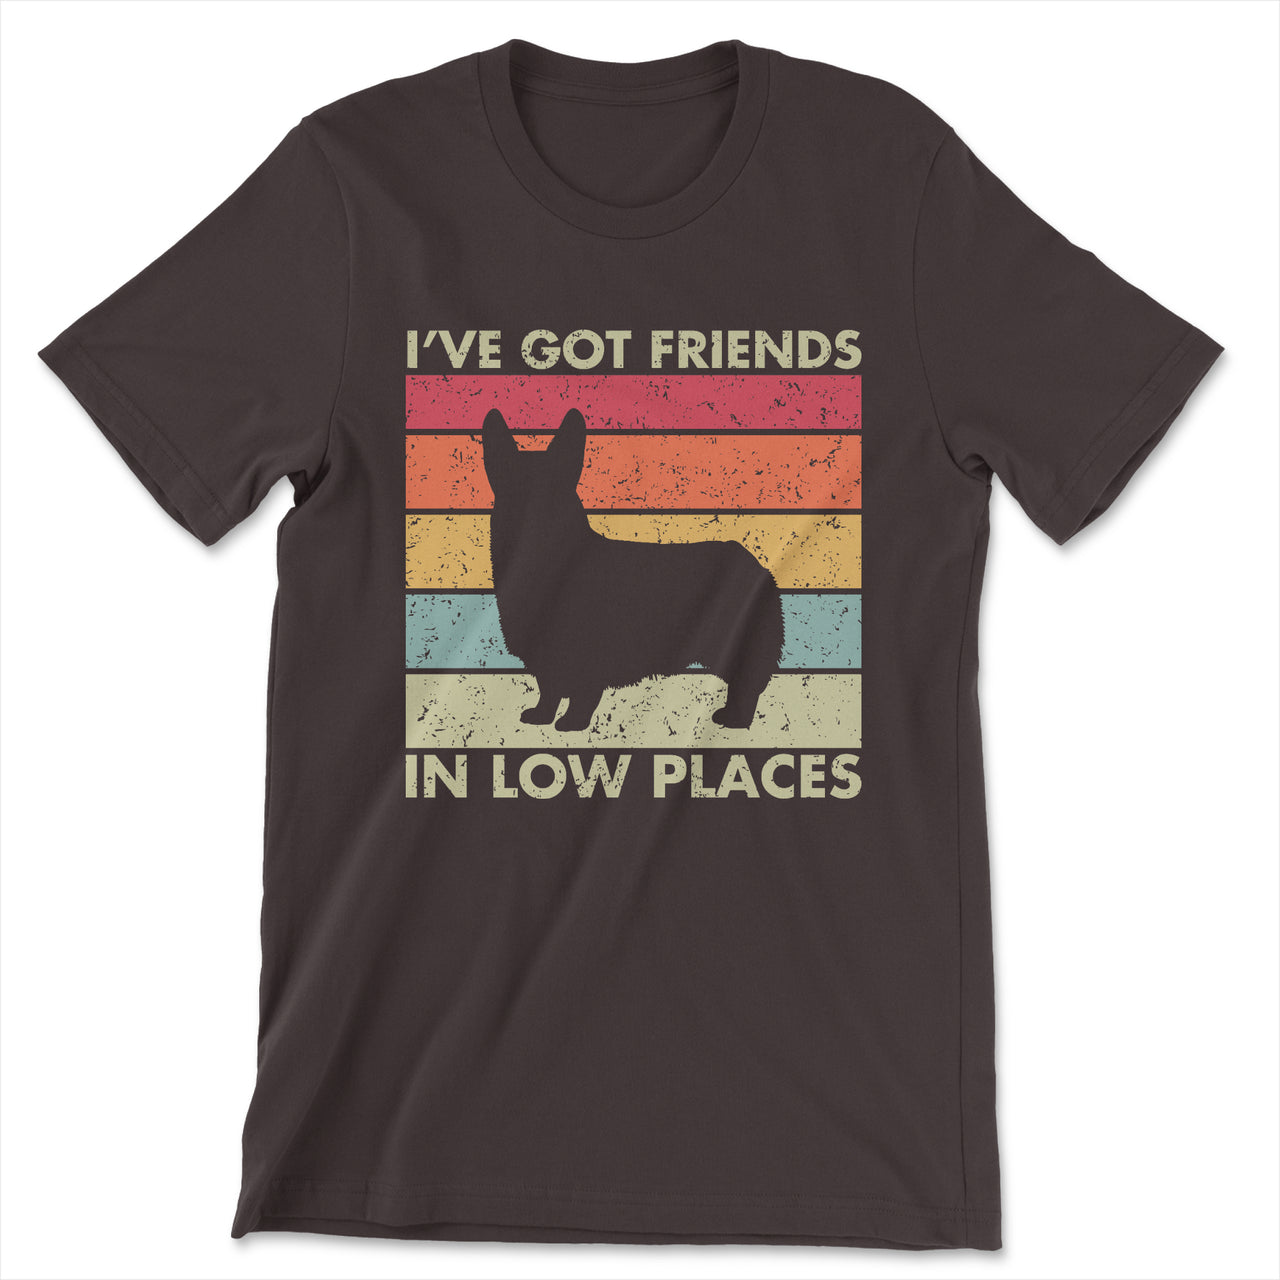 Corgi T-Shirt - I've Got Friends in Low Places Shirt